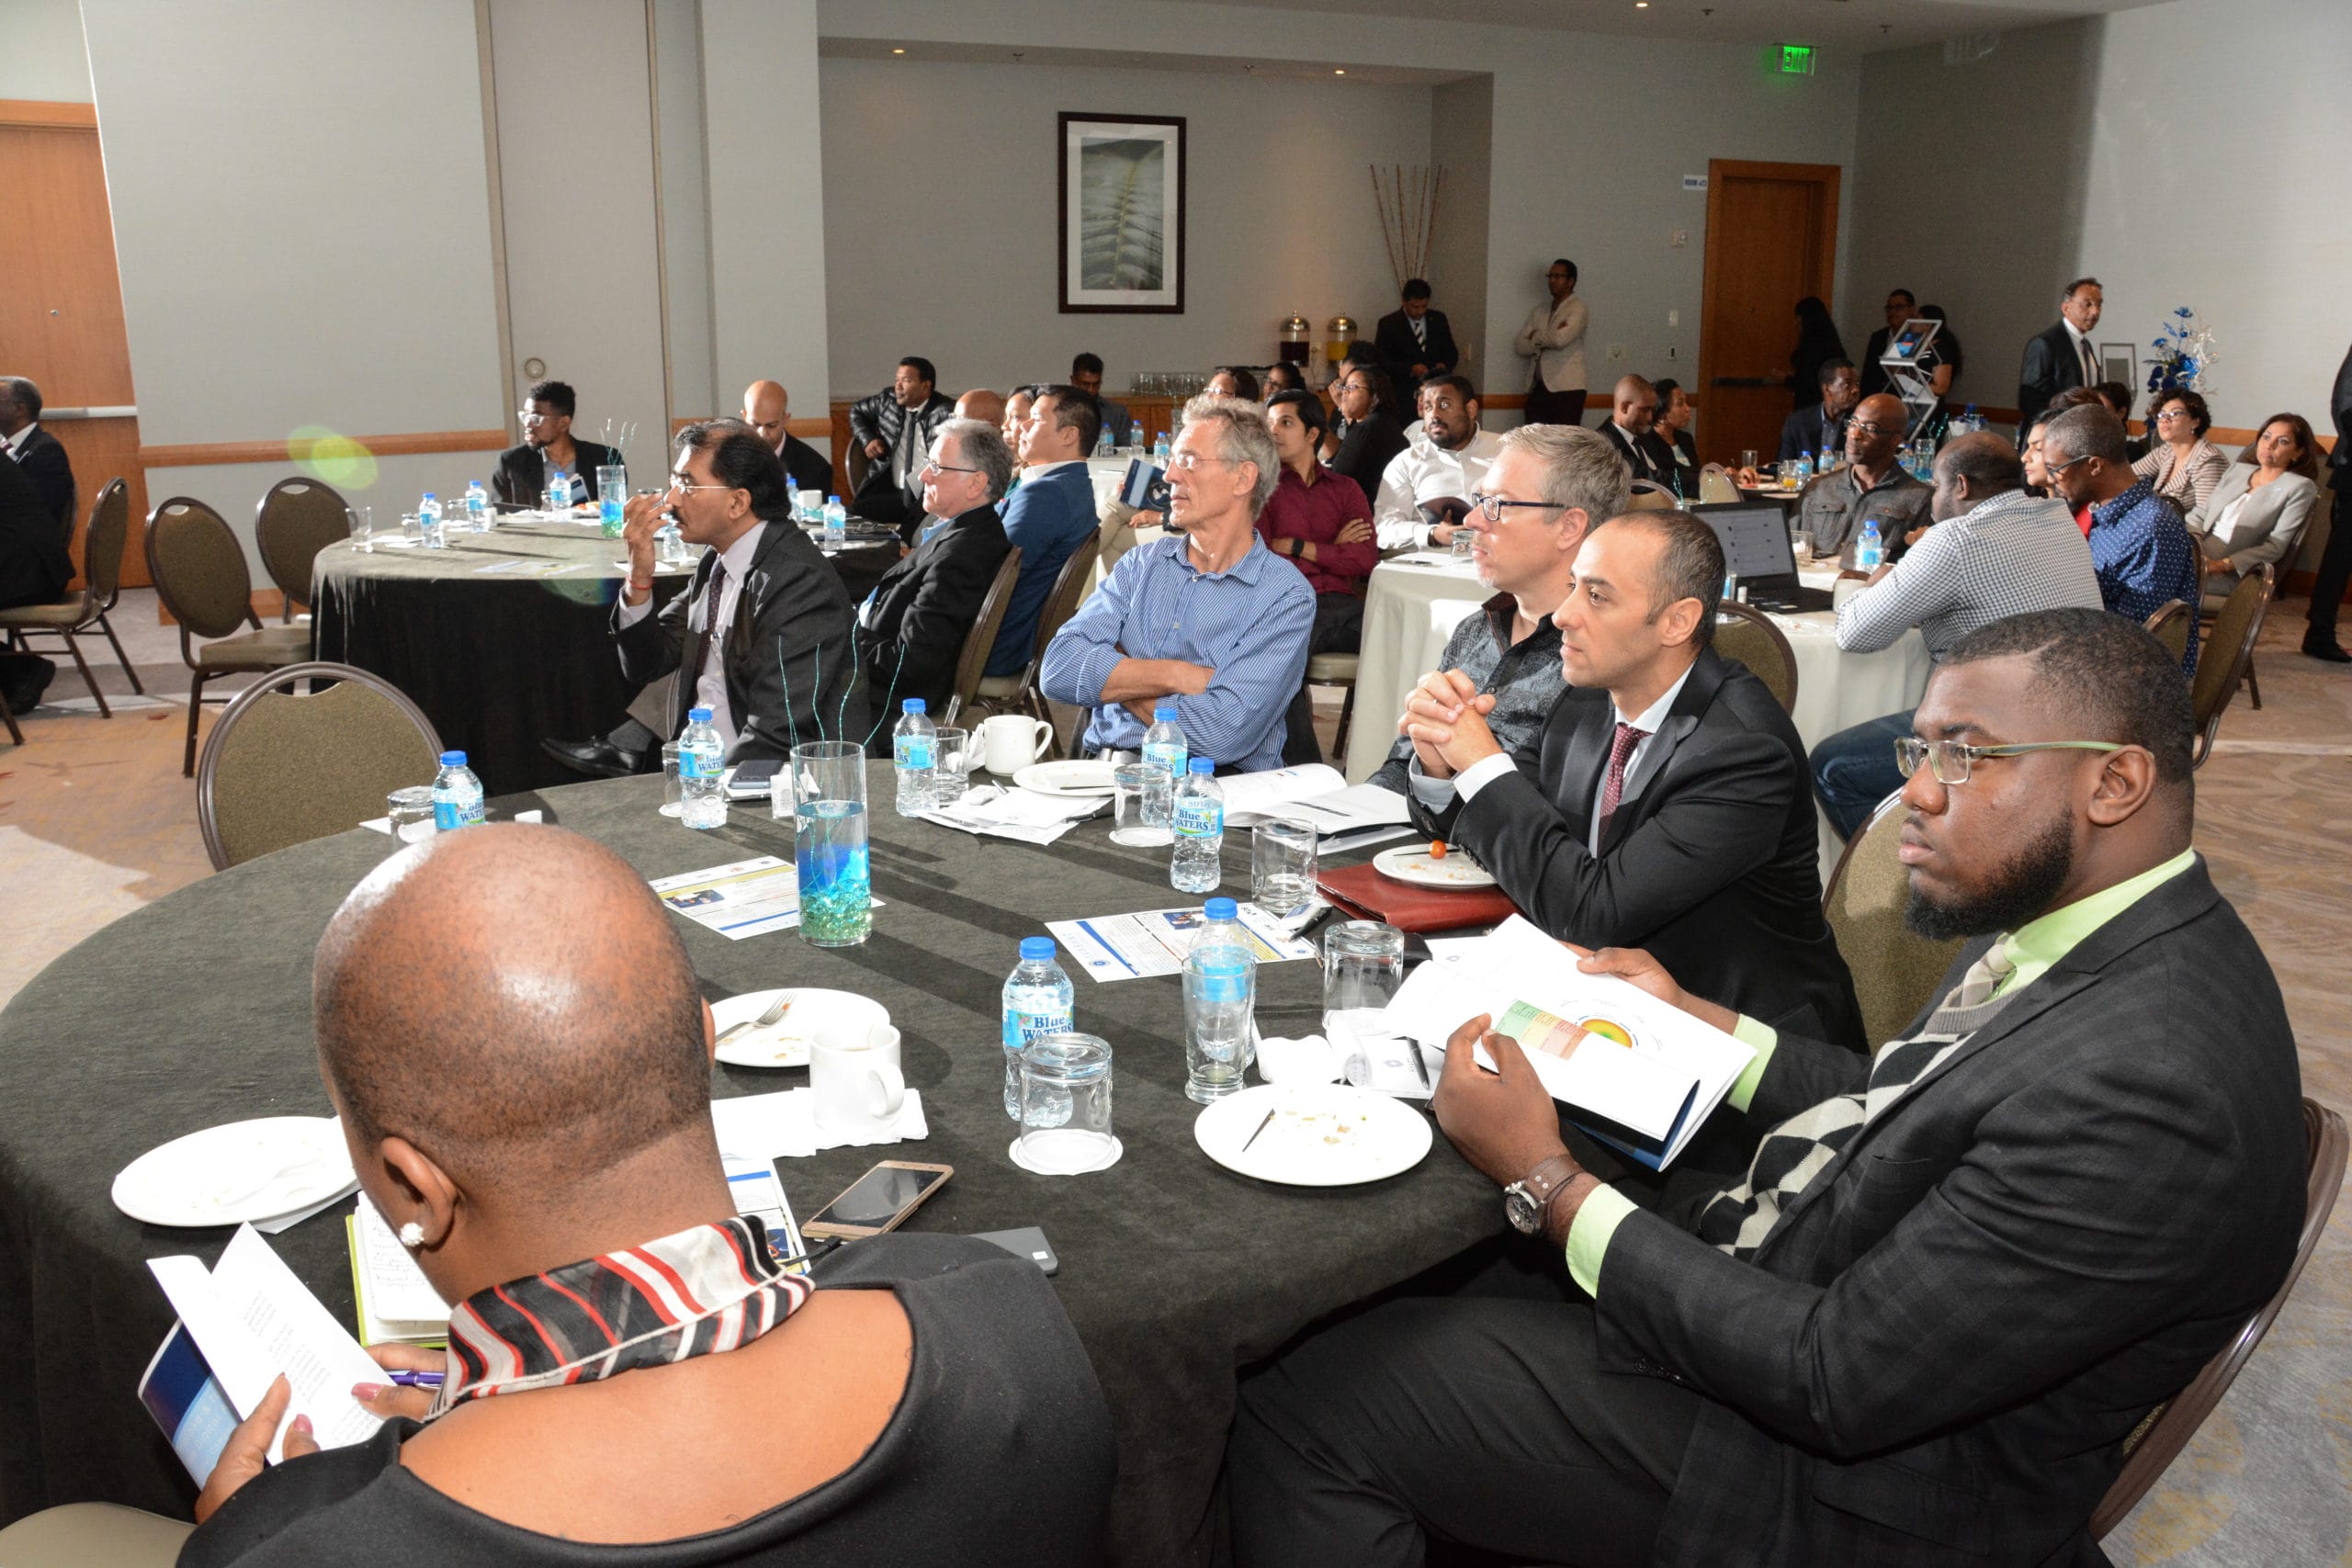 Avasant Digital Innovation and Business Transformation Forum – Trinidad and Tobago